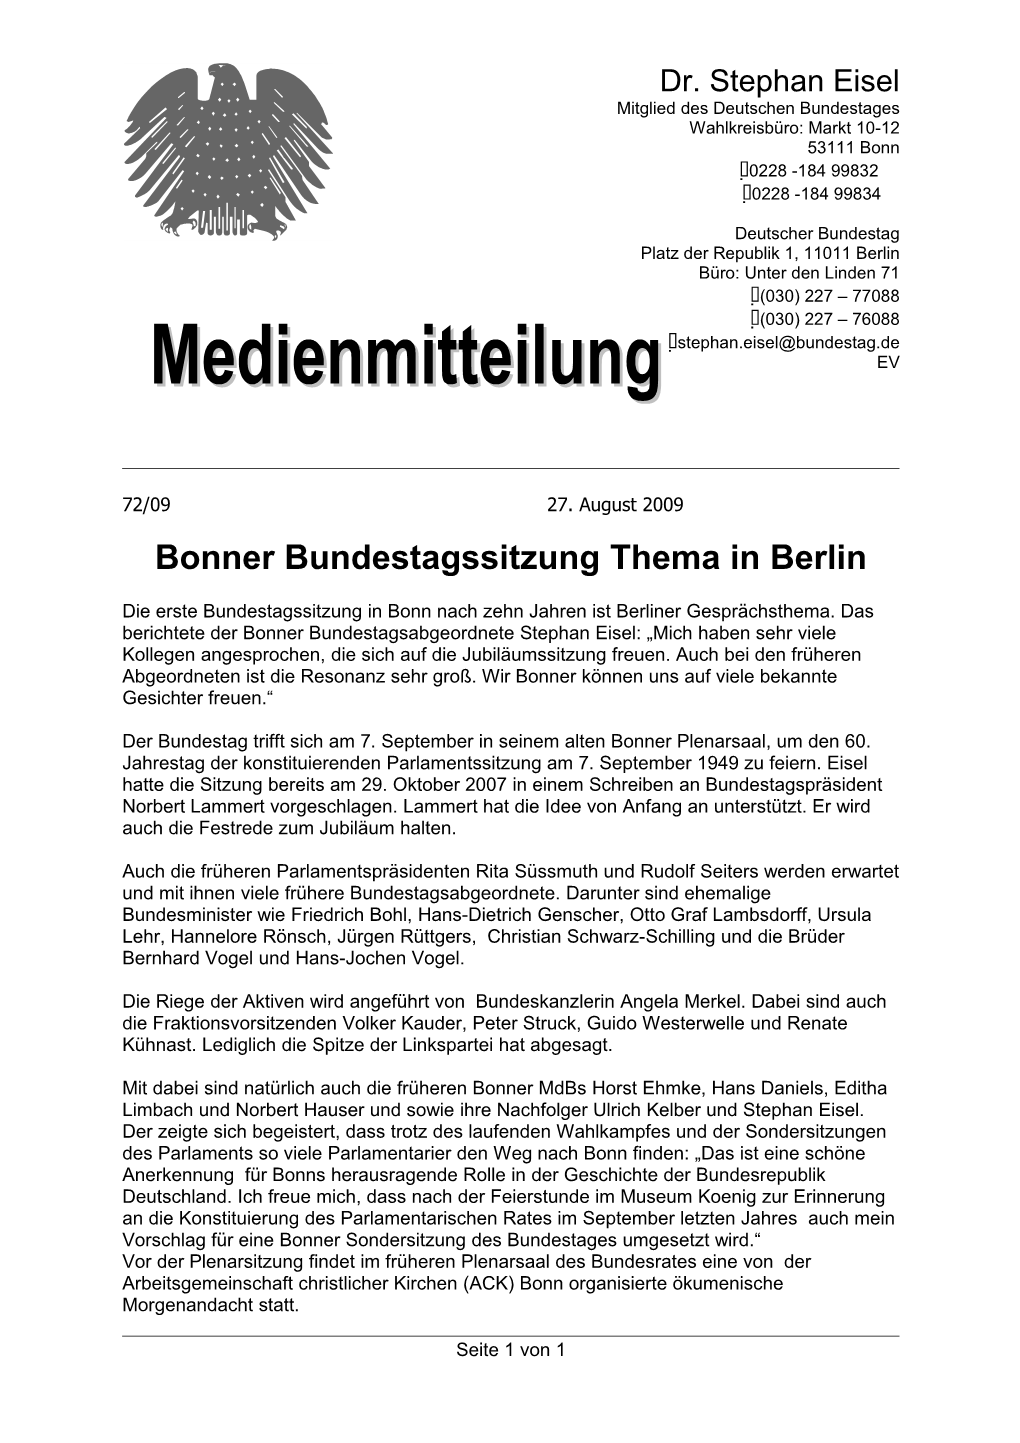 Bonner Bundestagssitzung Thema in Berlin